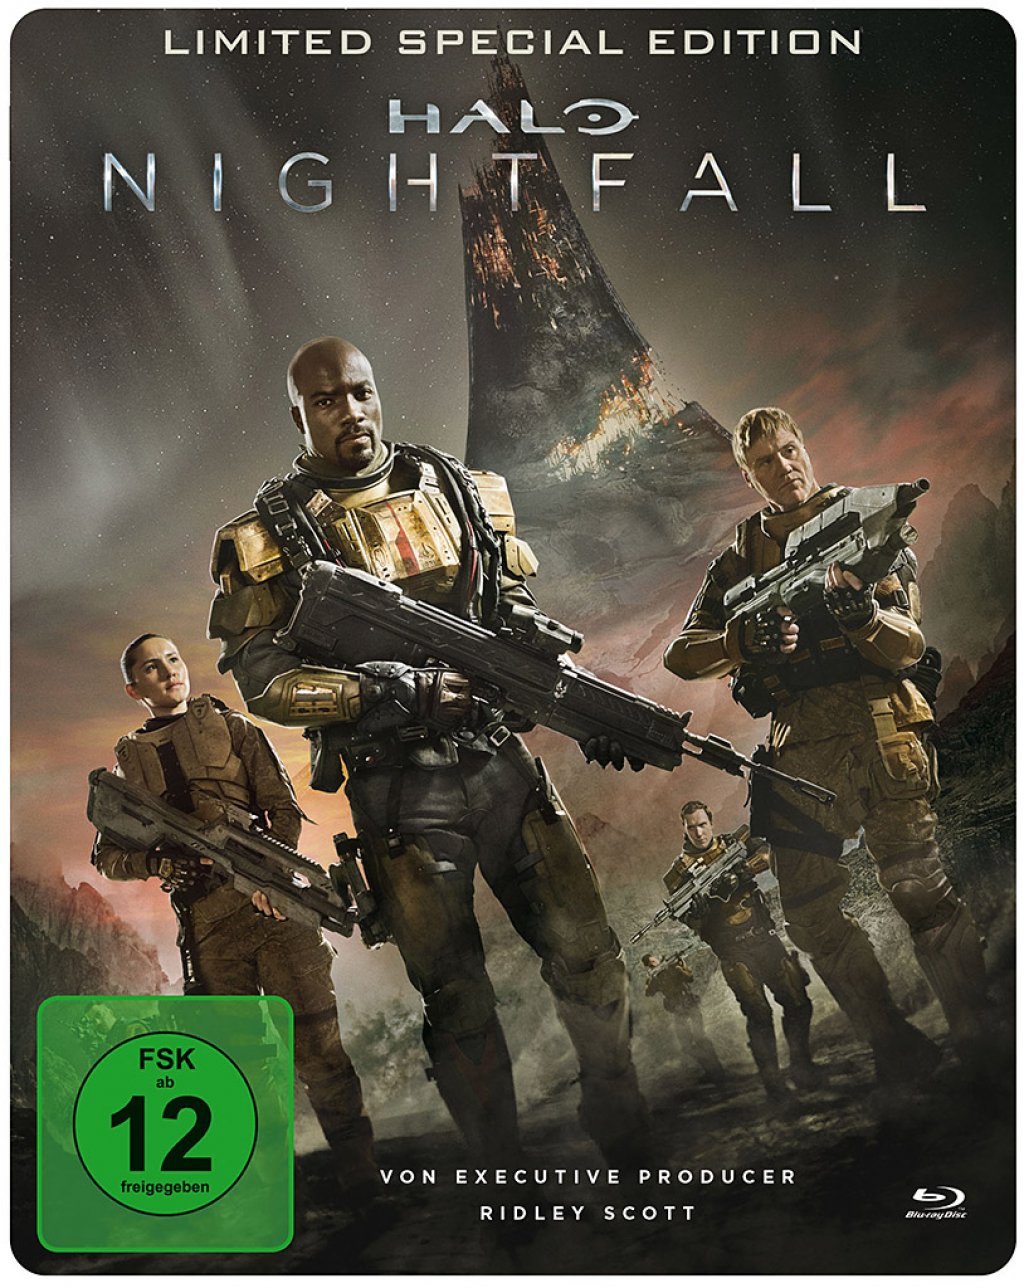 Halo Nightfall Limited Special Edition Blu Ray